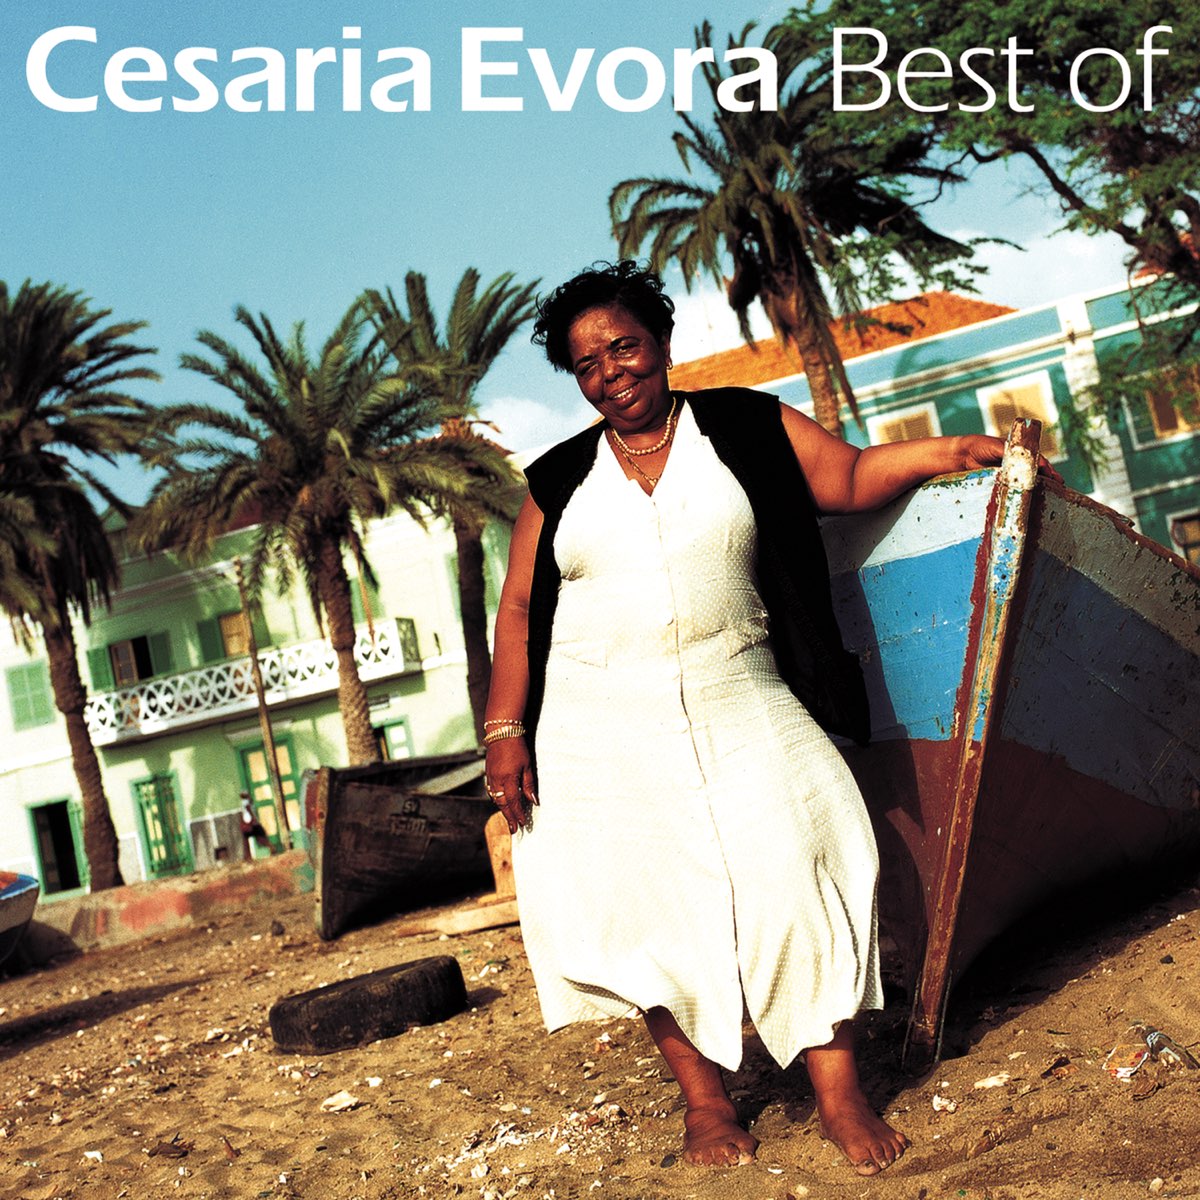 ‎Best Of by Cesária Evora on Apple Music